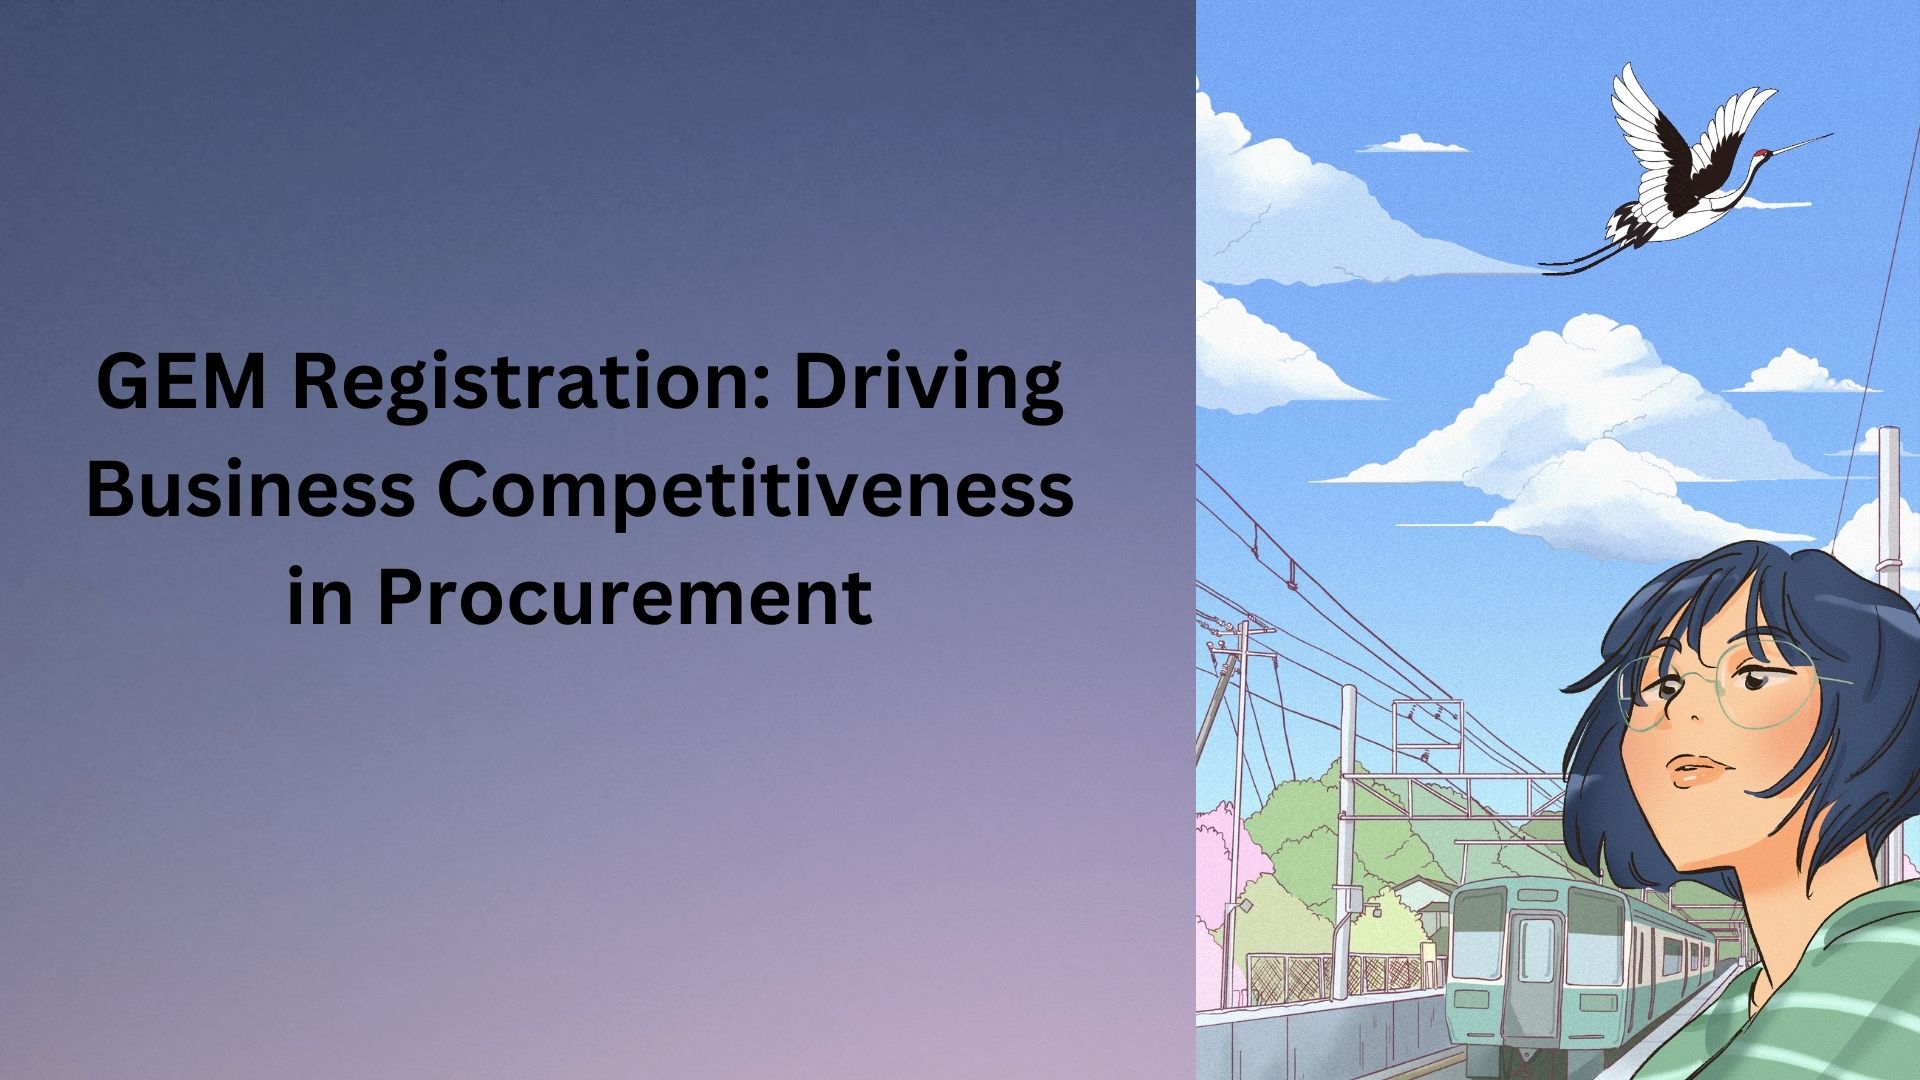 GEM Registration: Driving Business Competitiveness in Procurement